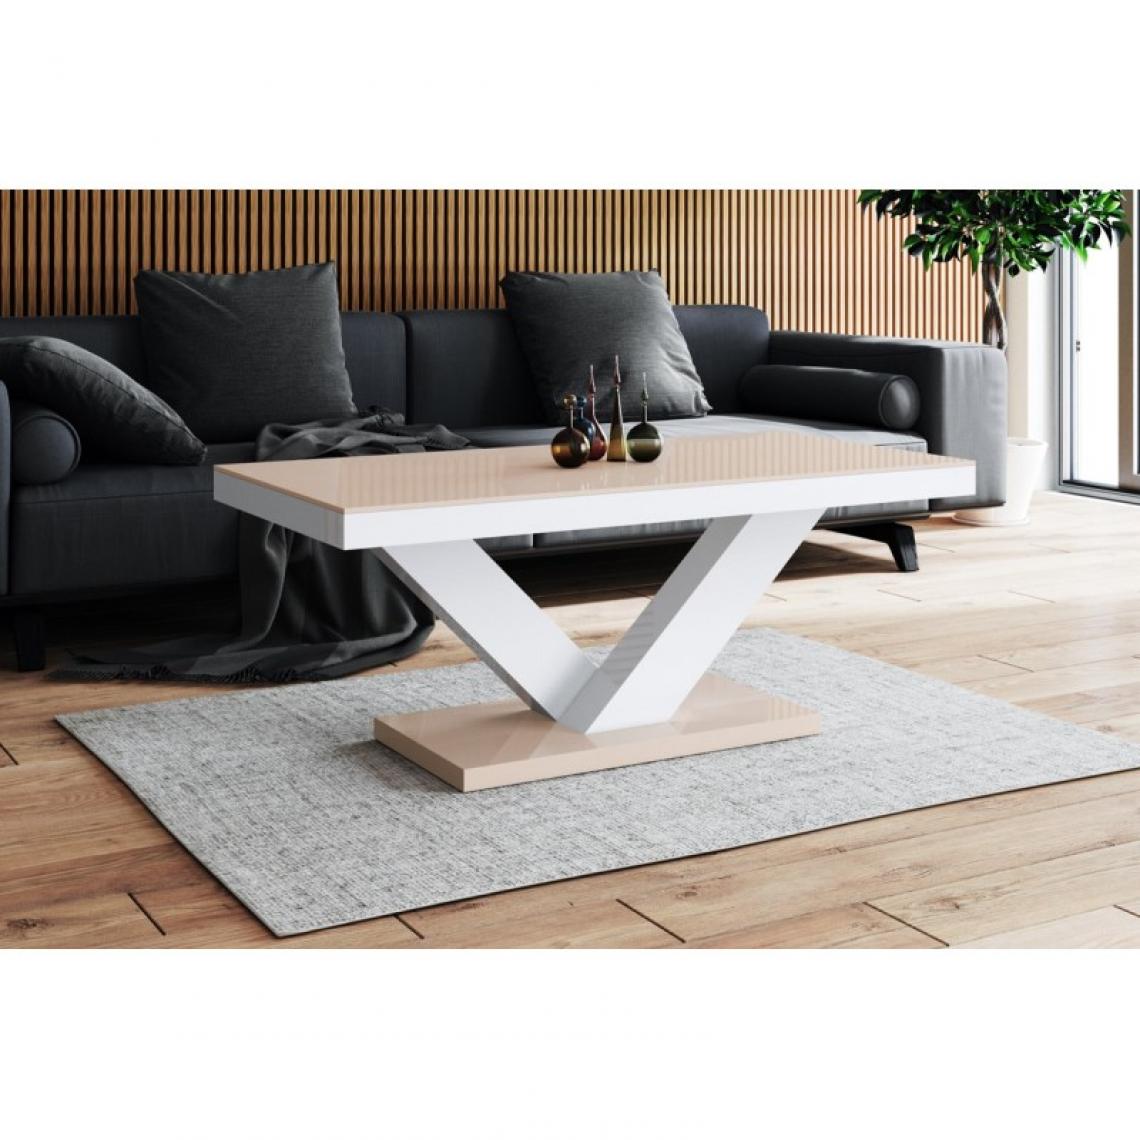 Carellia - Table basse design 120 cm x 60 cm x 49 cm - Cappuccino - Tables basses